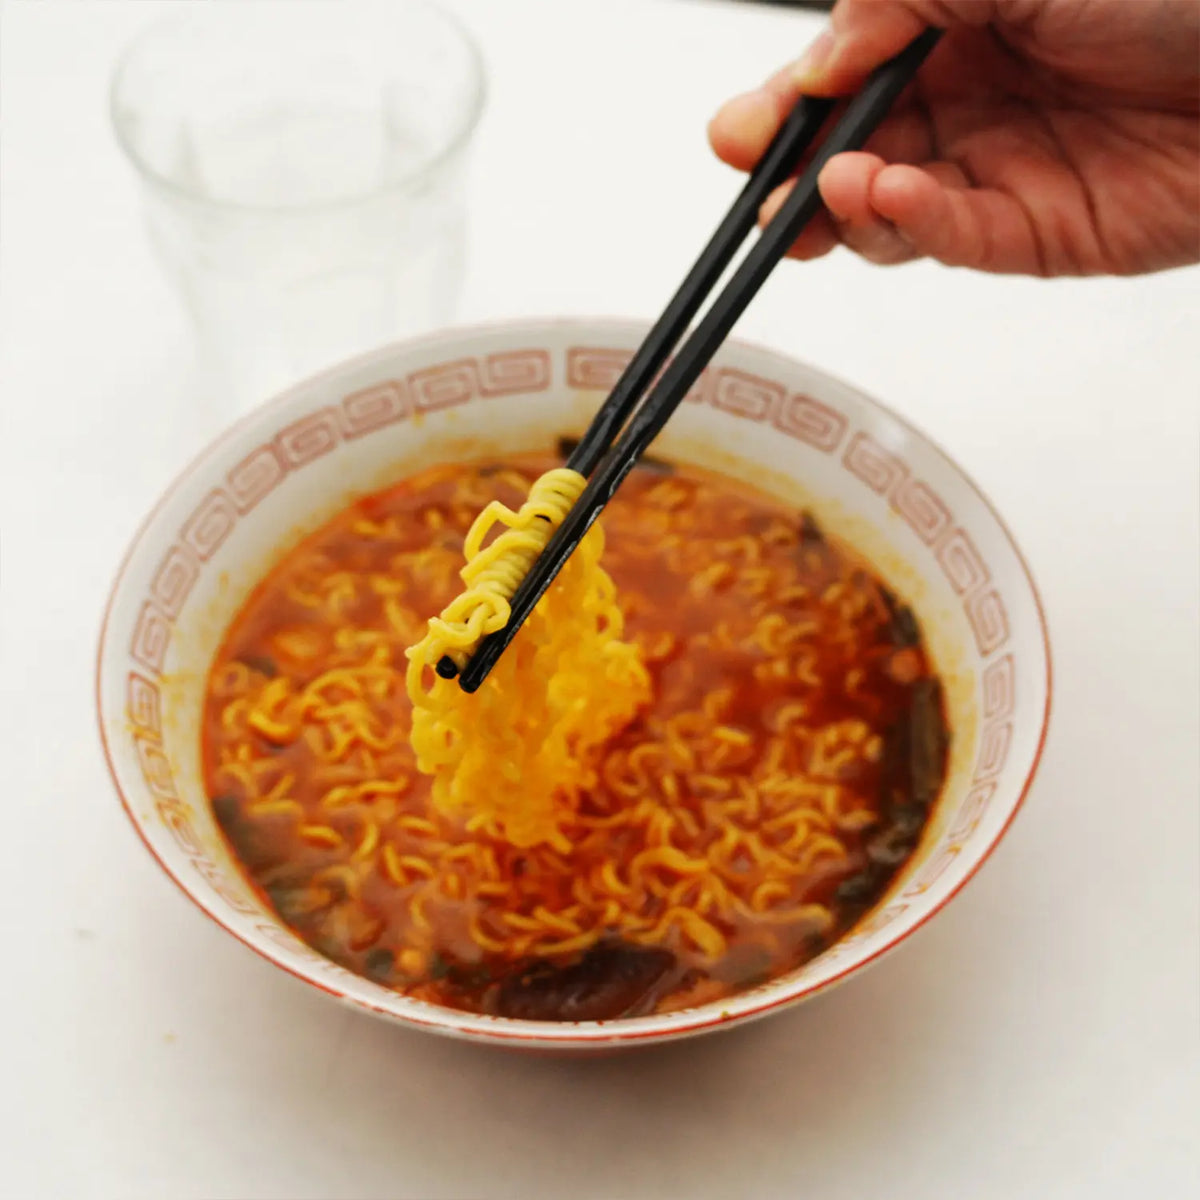 Akebono Decagonal Non-Slip Noodle Chopsticks